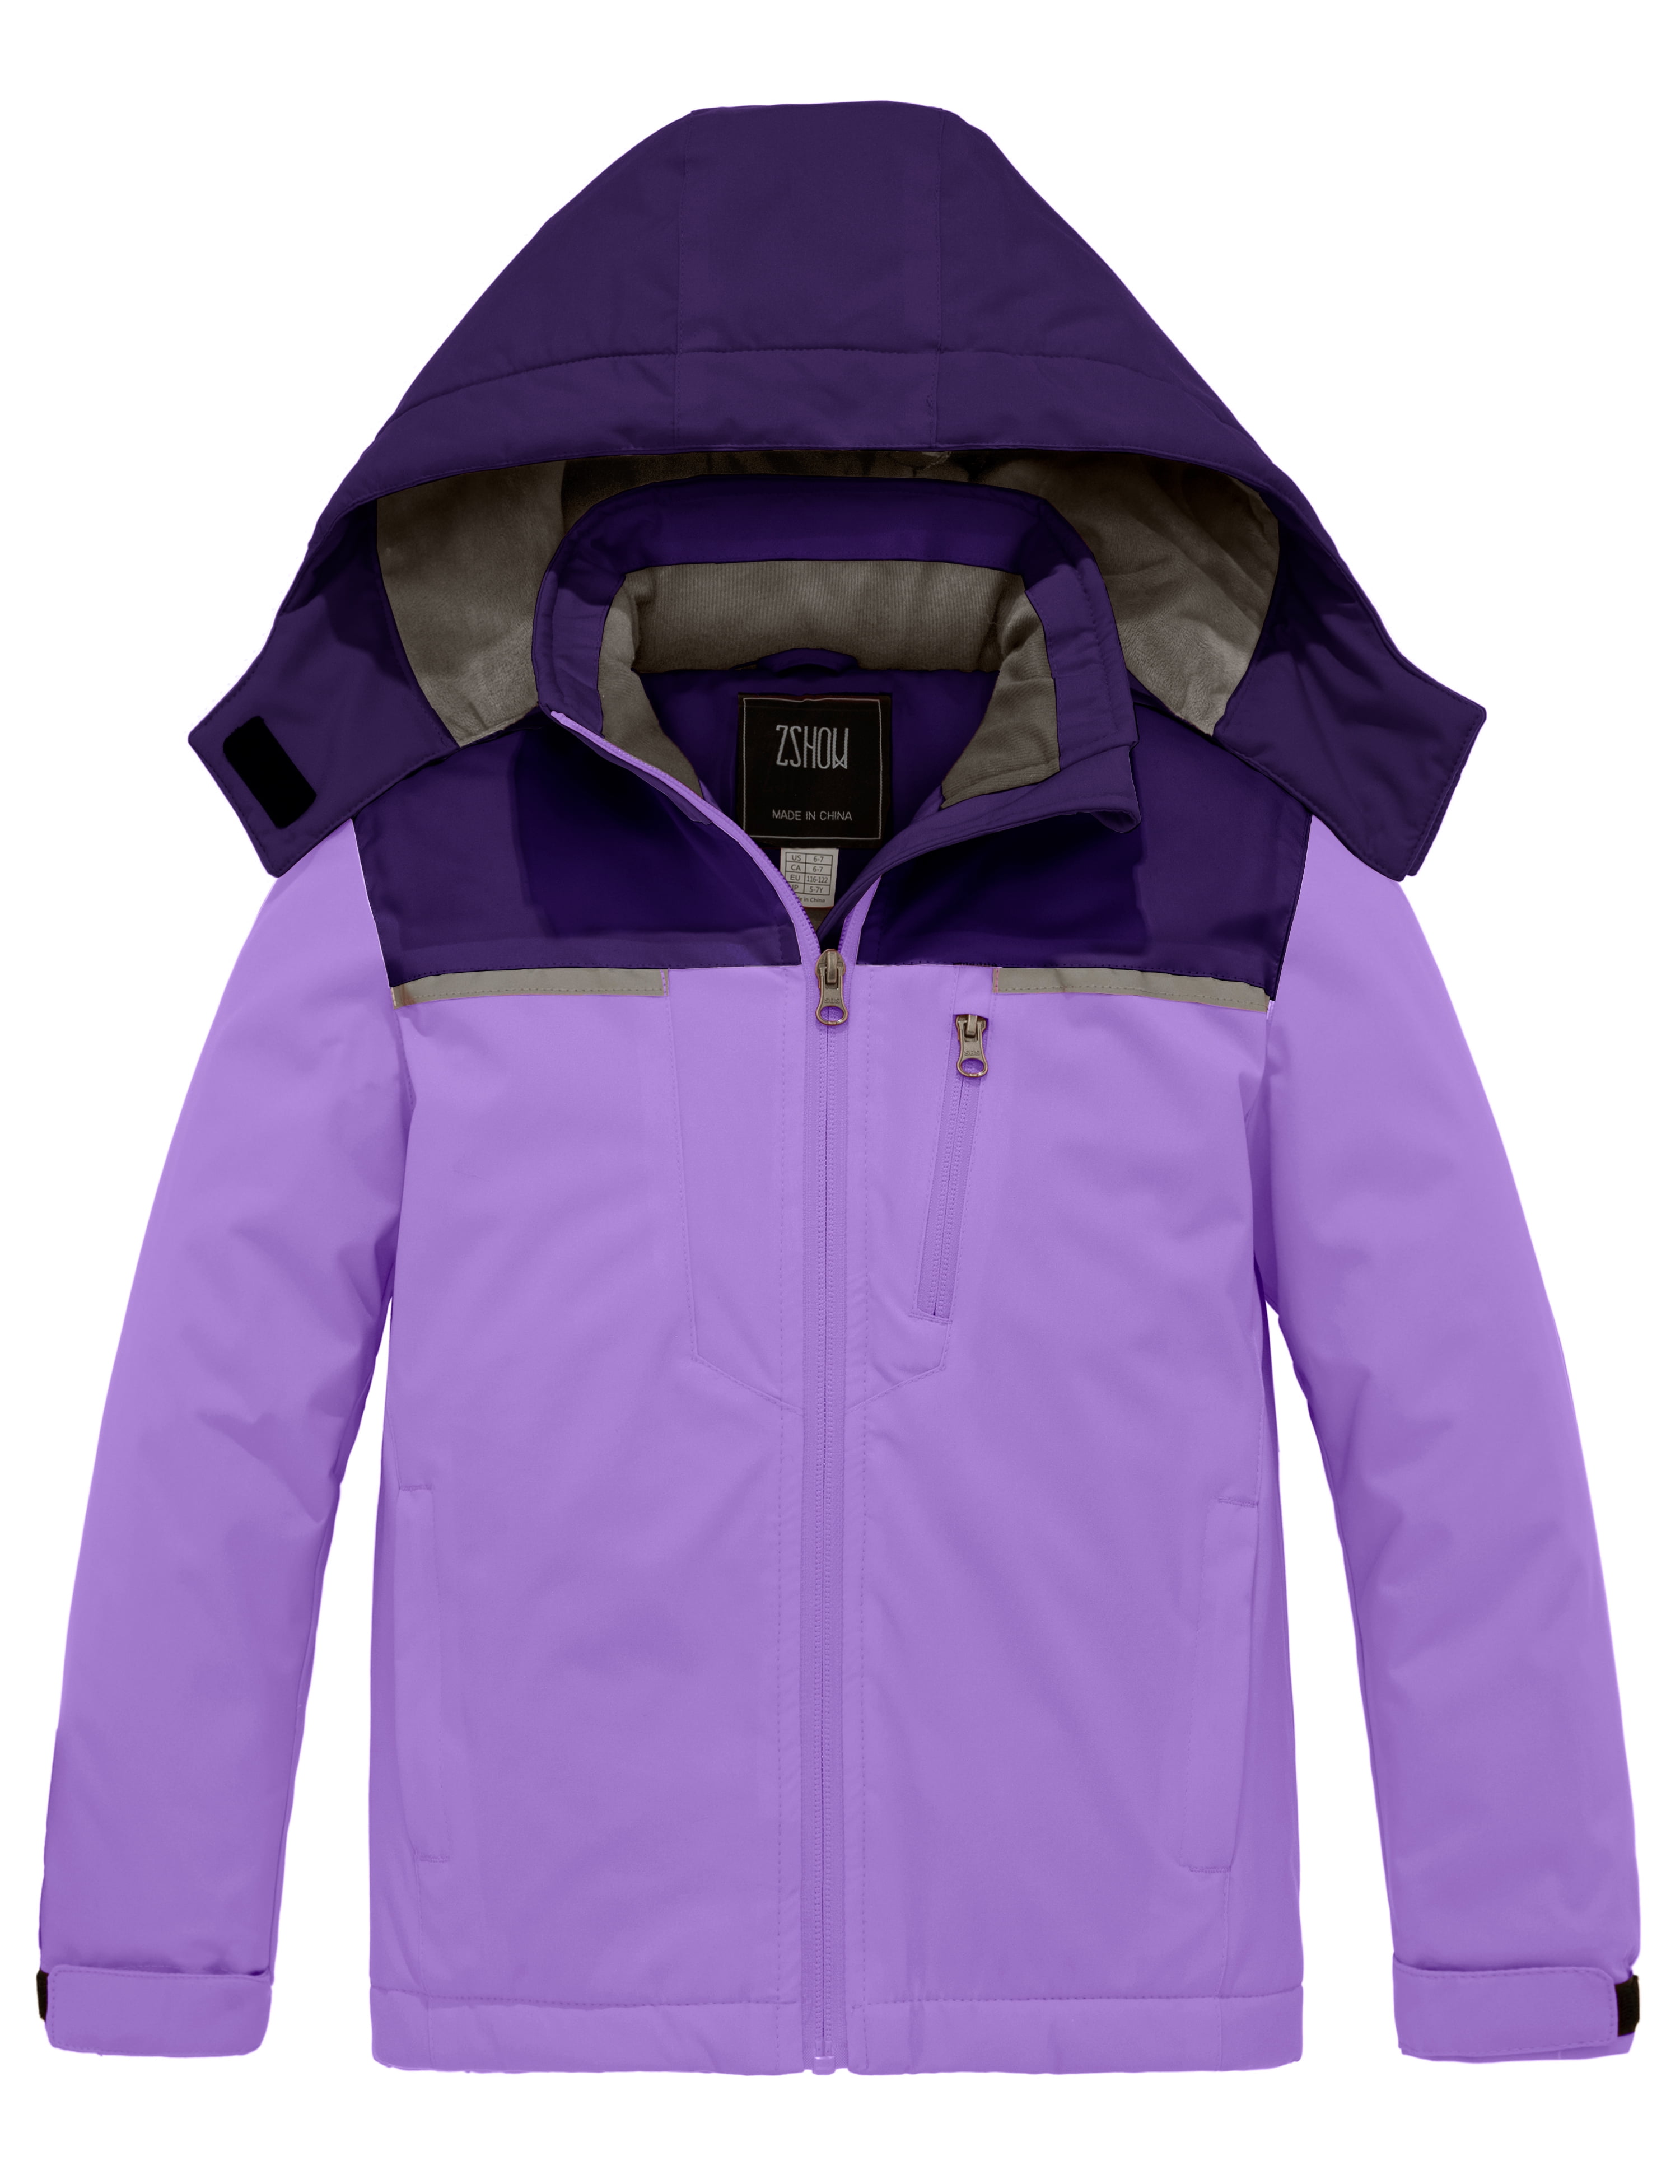 ZSHOW Girls' Waterproof Ski Jacket Warm Fleece Winter Coat 